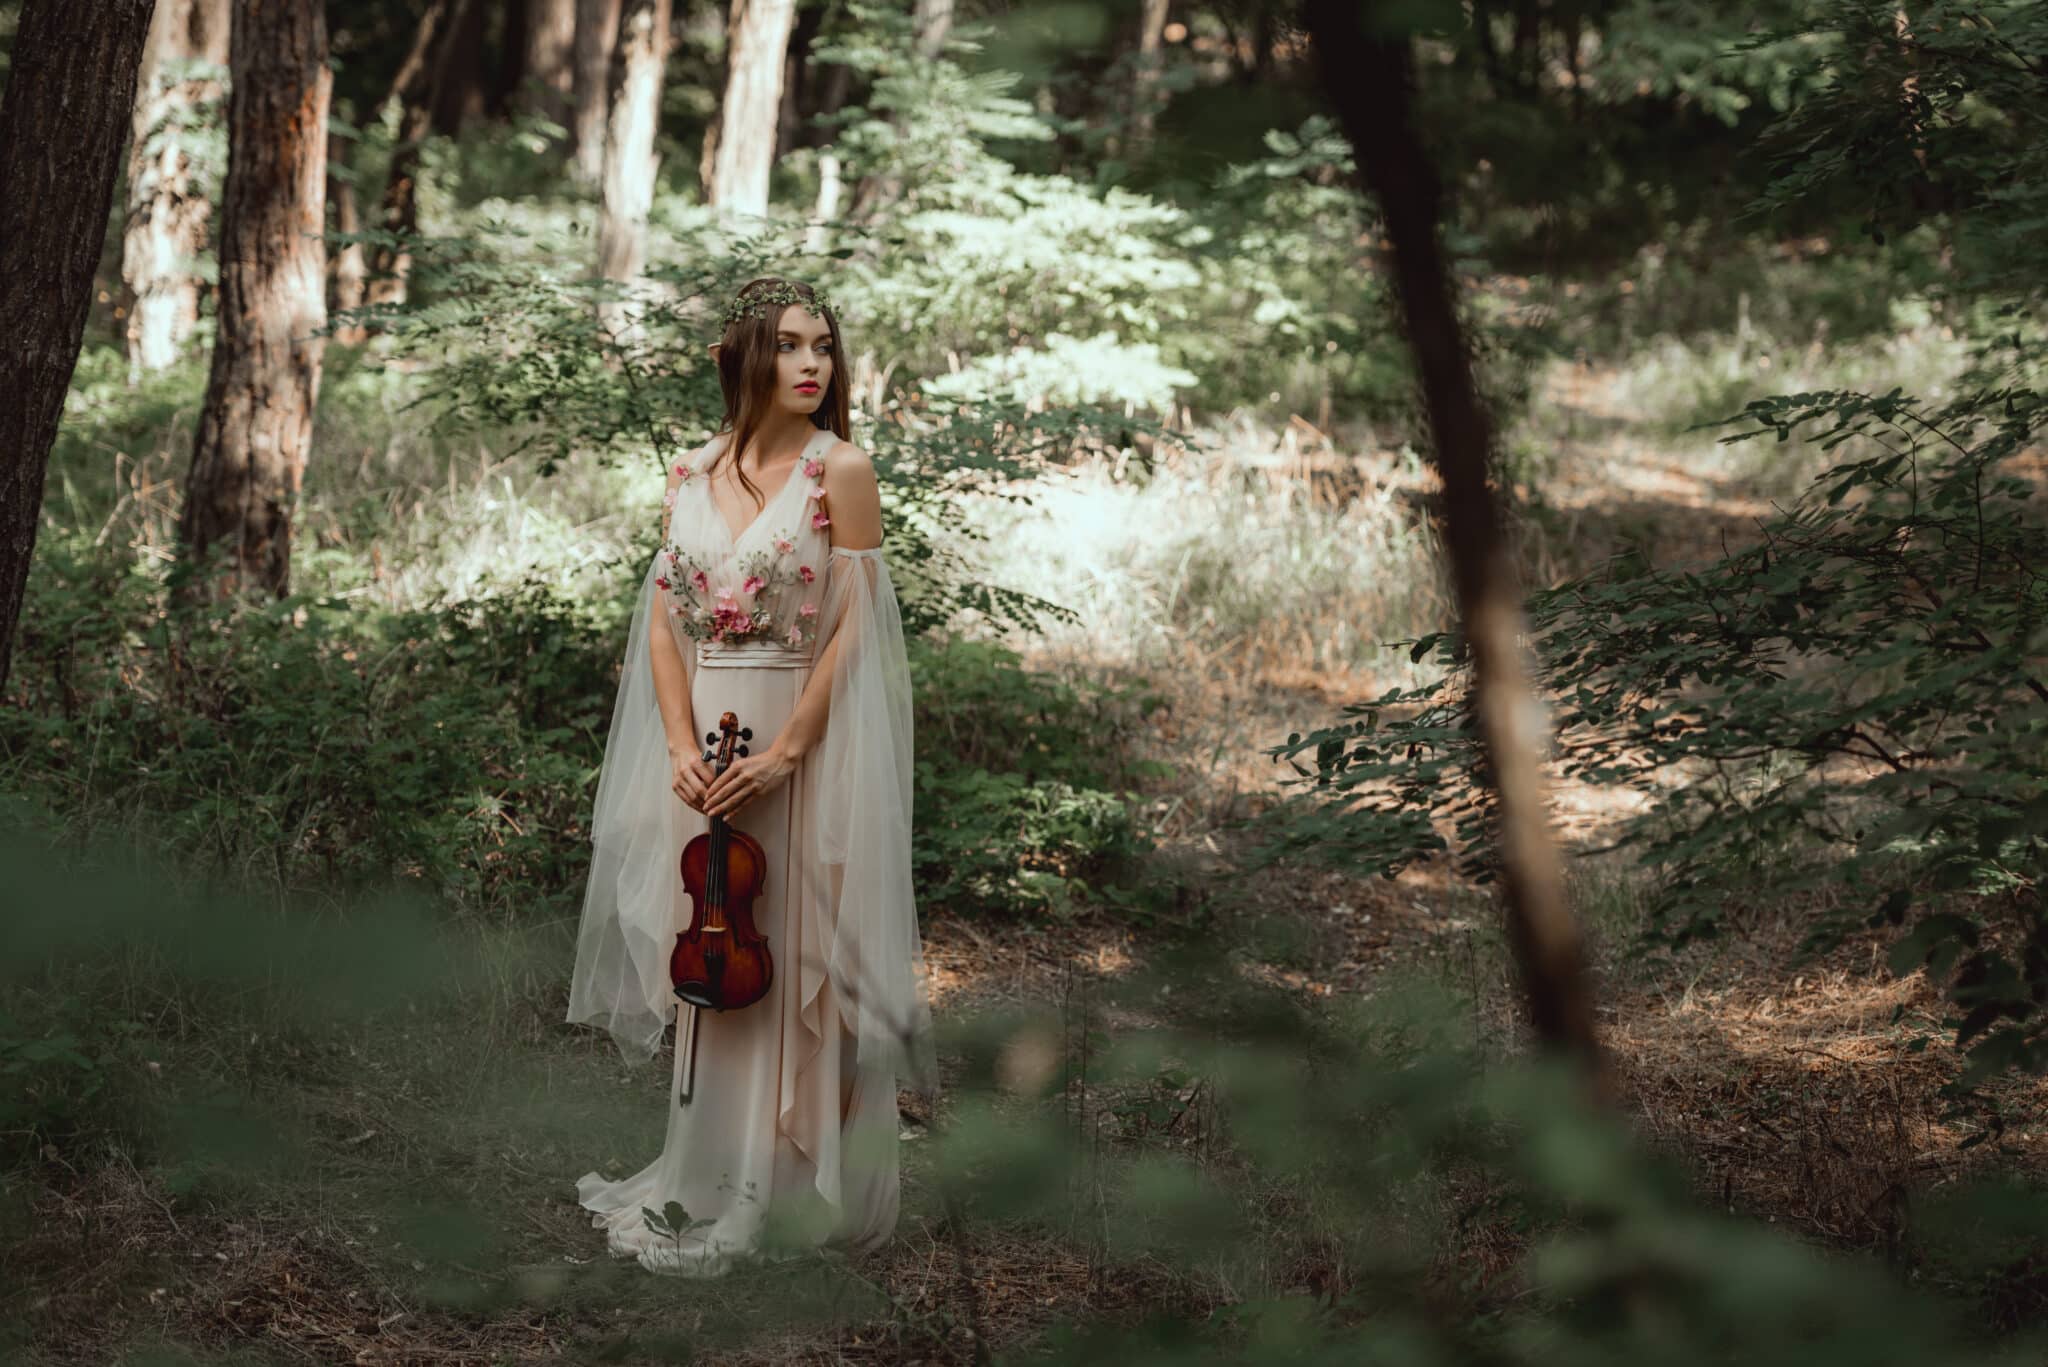 mystic elf in elegant dress holding violin in beautiful forest.